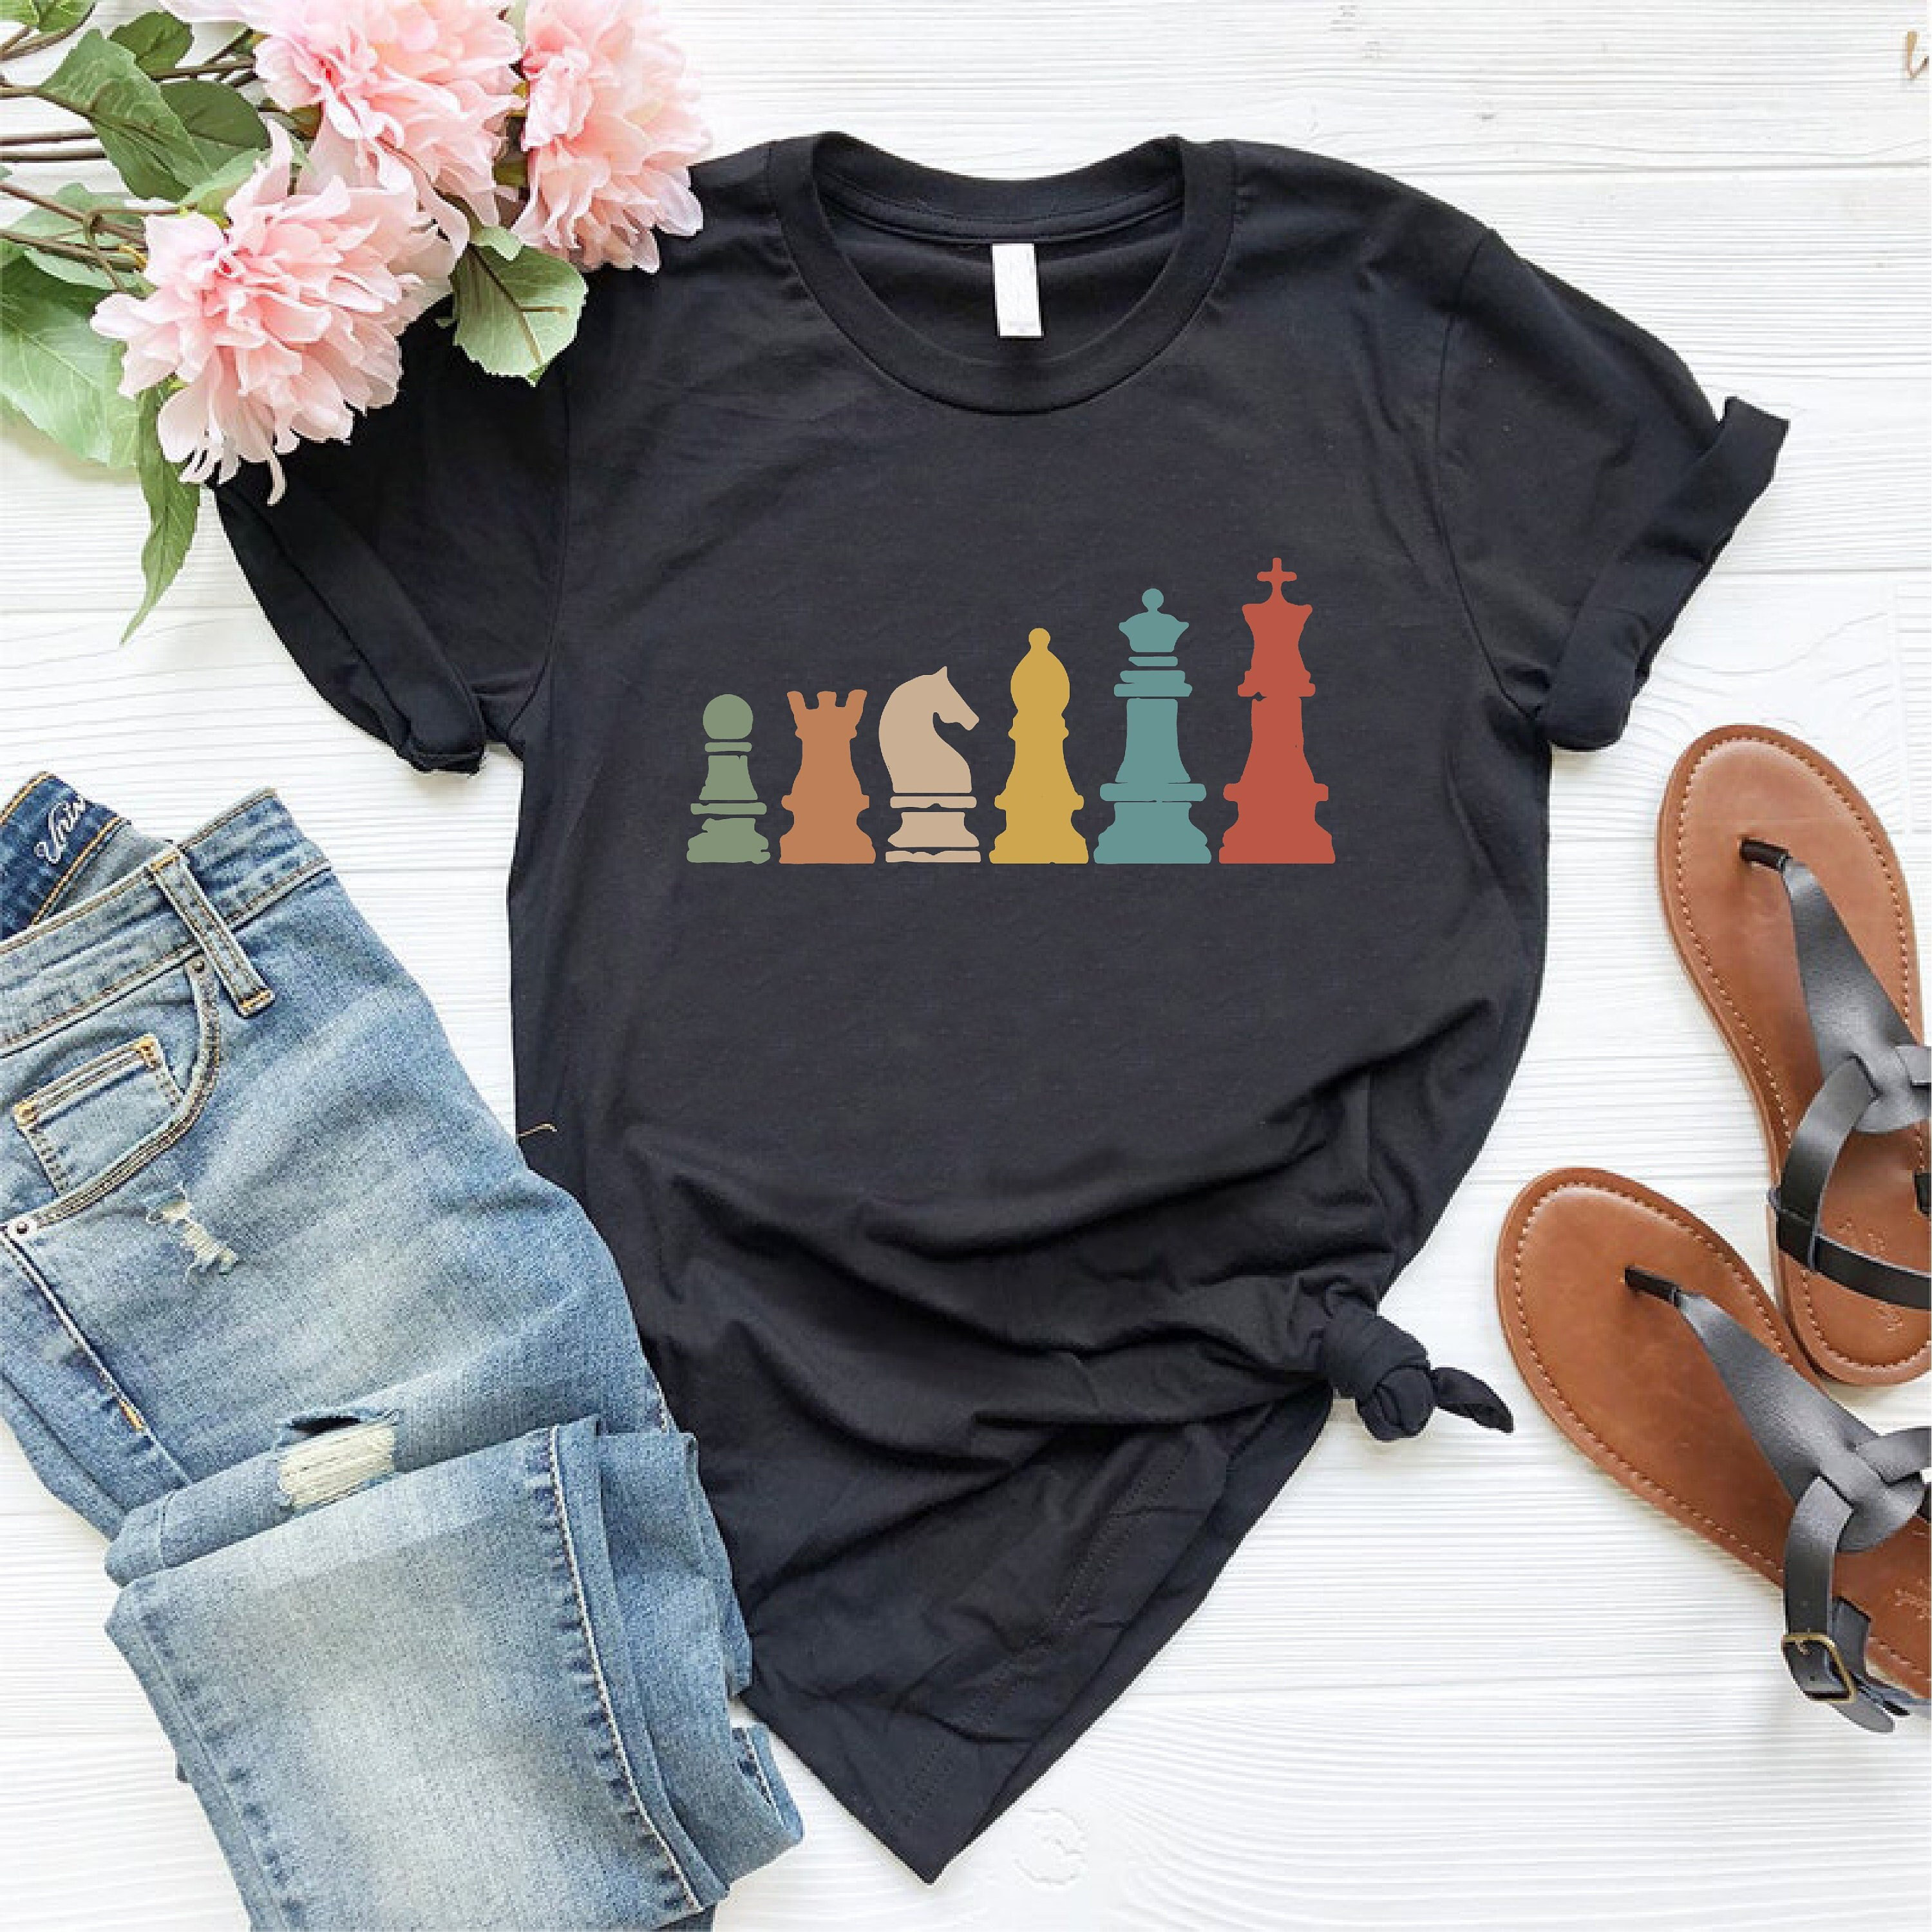 Sicilian defense - Sicilian defense in Chess, love playing chess Shirt,  Hoodie, Sweatshirt - FridayStuff